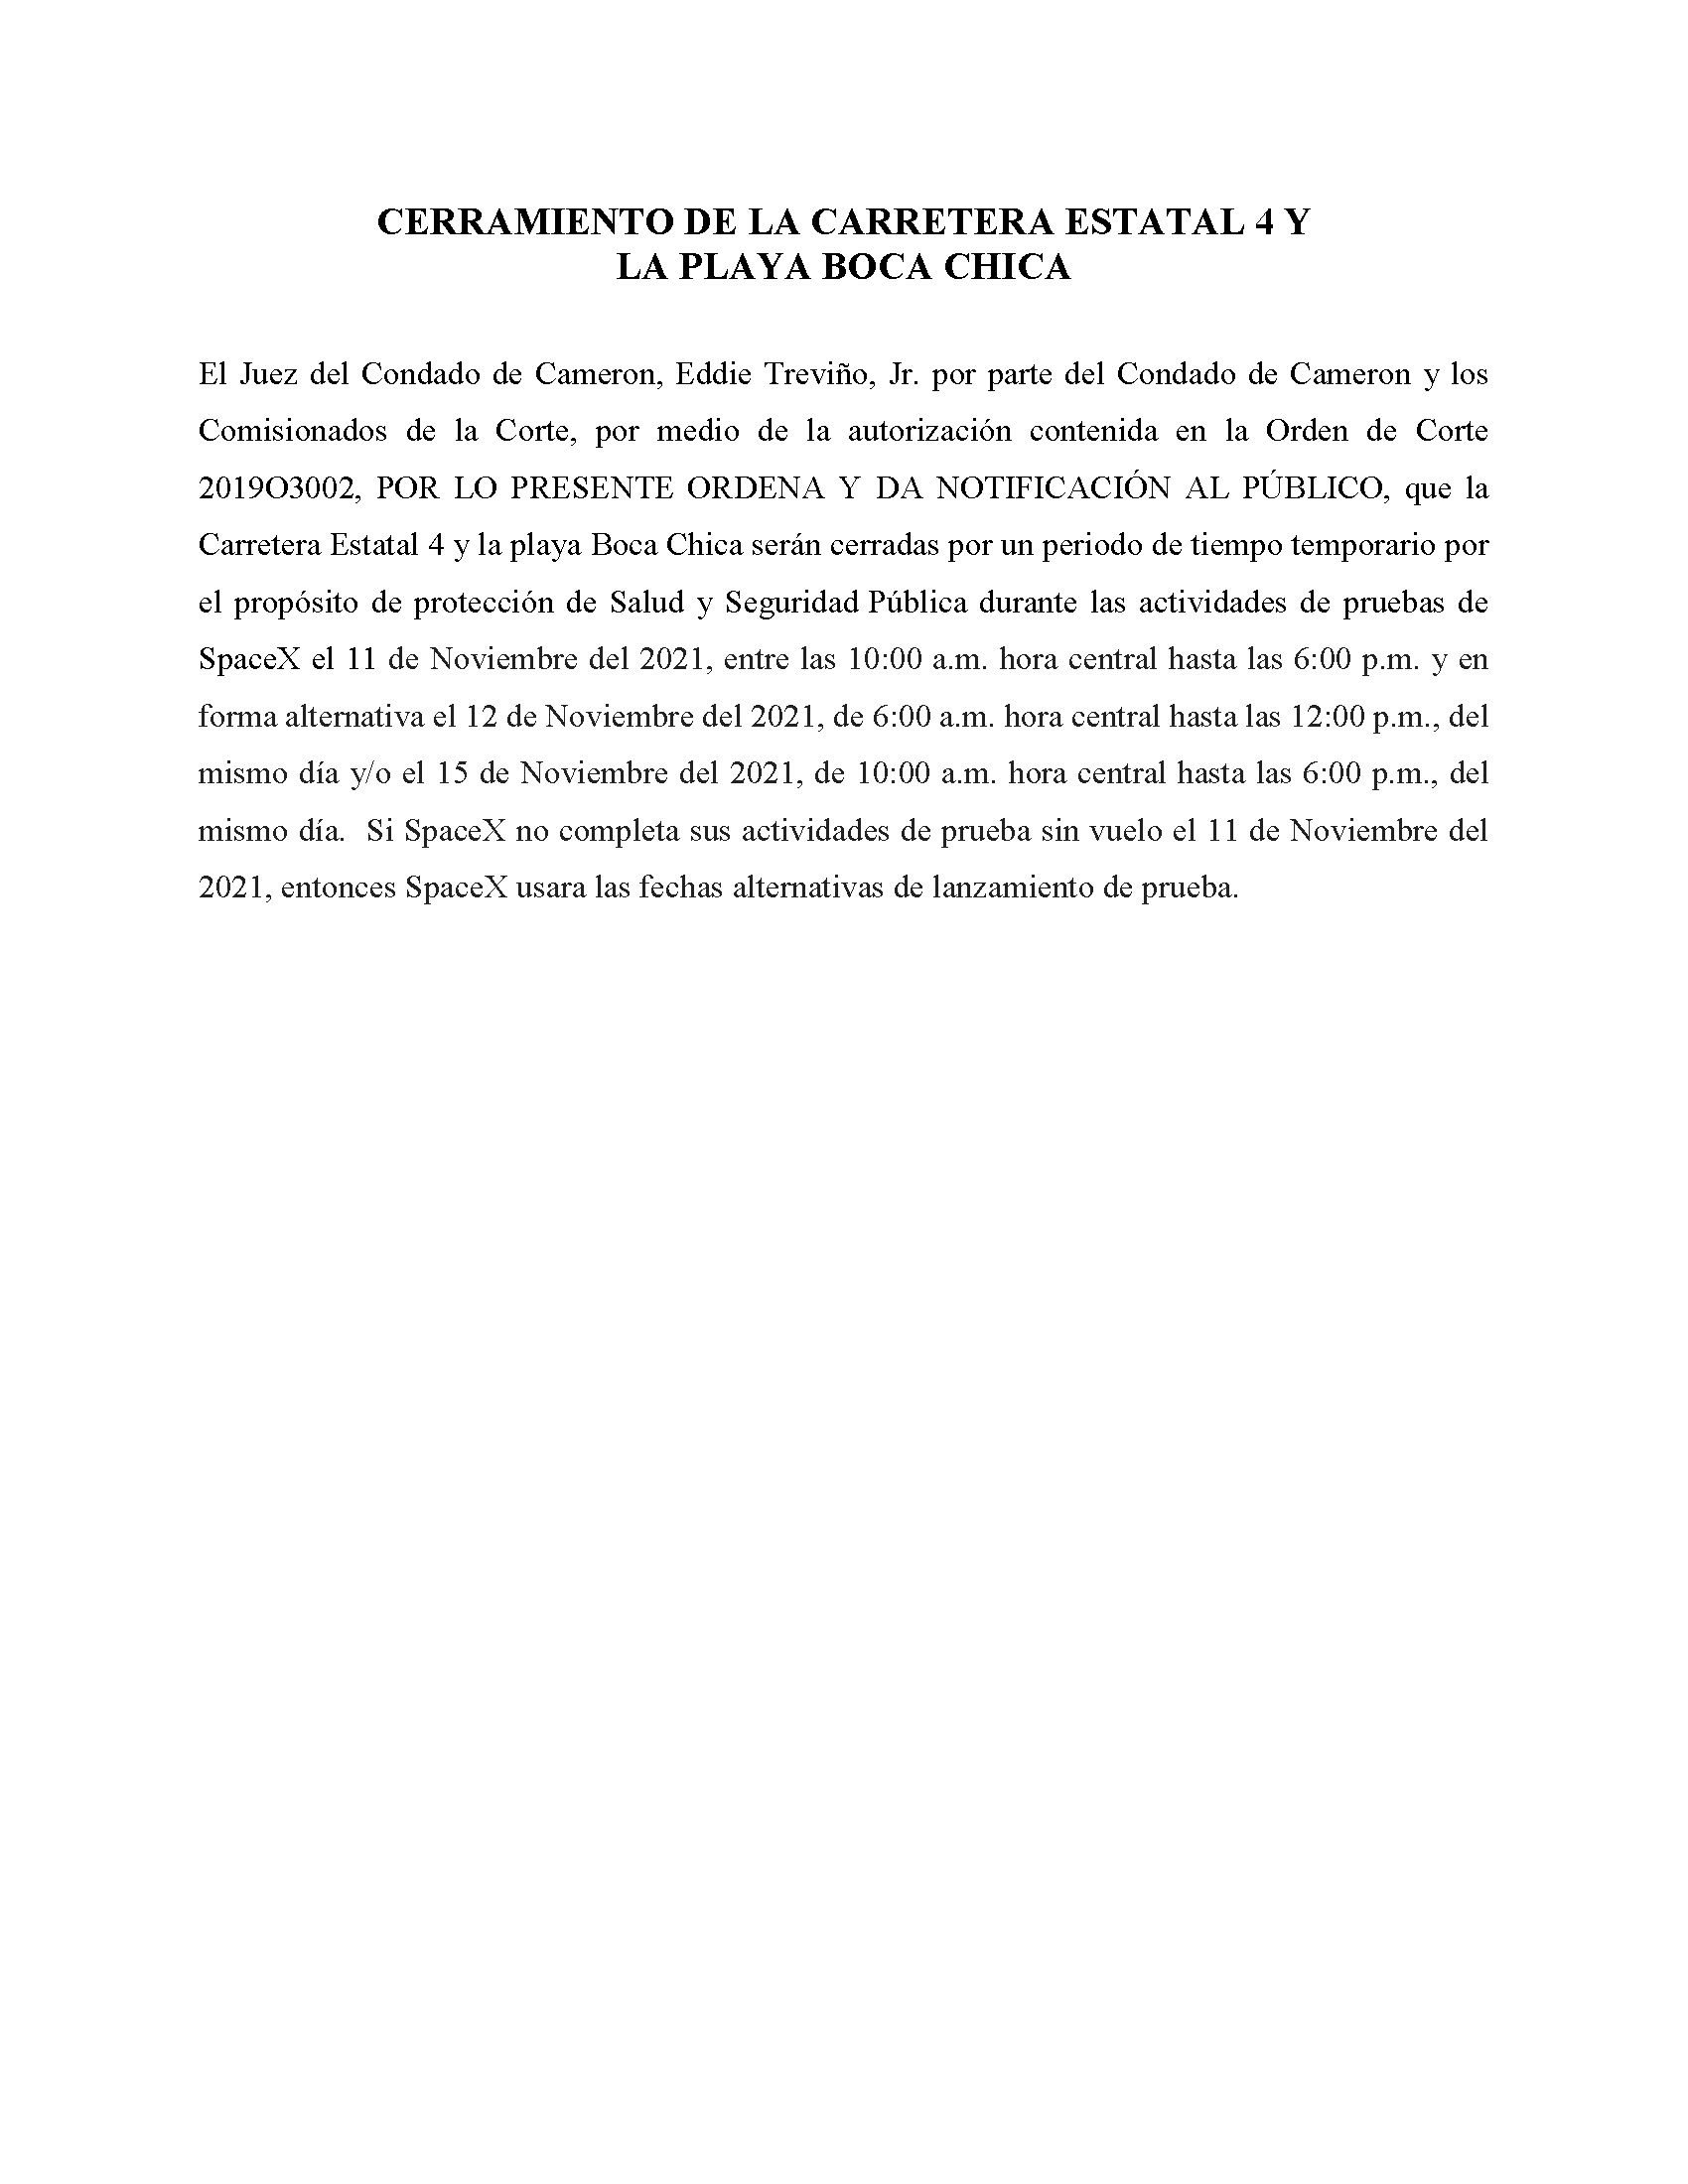 ORDER.CLOSURE OF HIGHWAY 4 Y LA PLAYA BOCA CHICA.SPANISH.11.11.2021